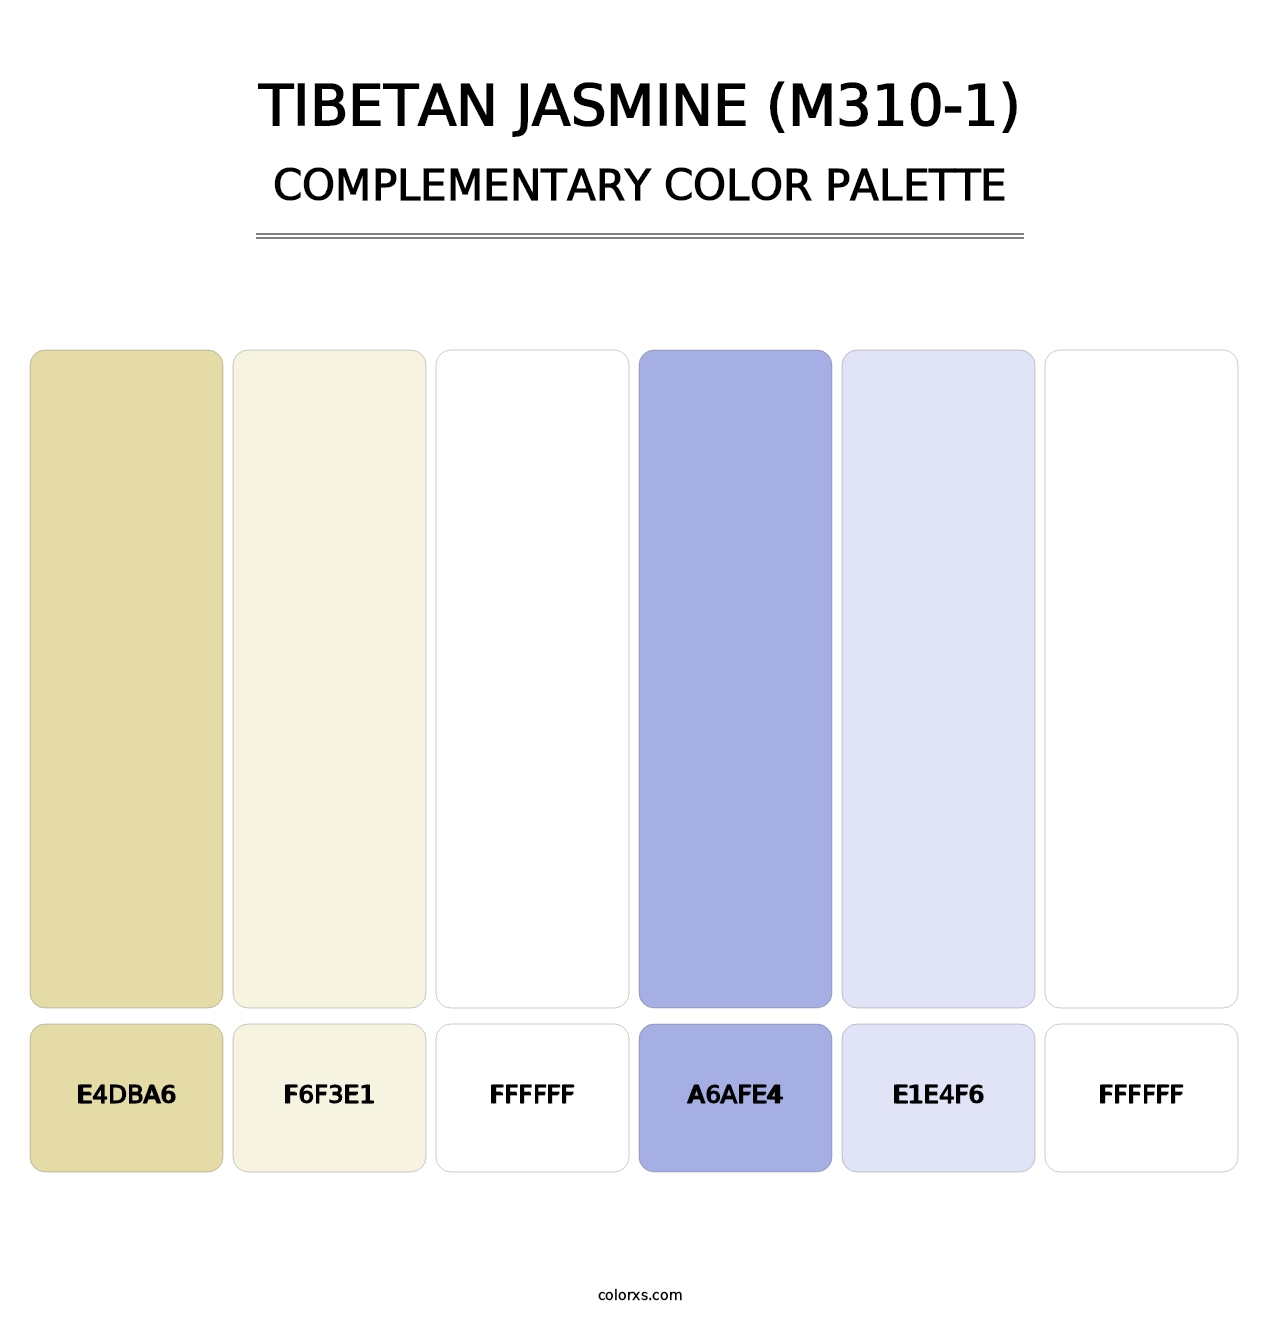 Tibetan Jasmine (M310-1) - Complementary Color Palette